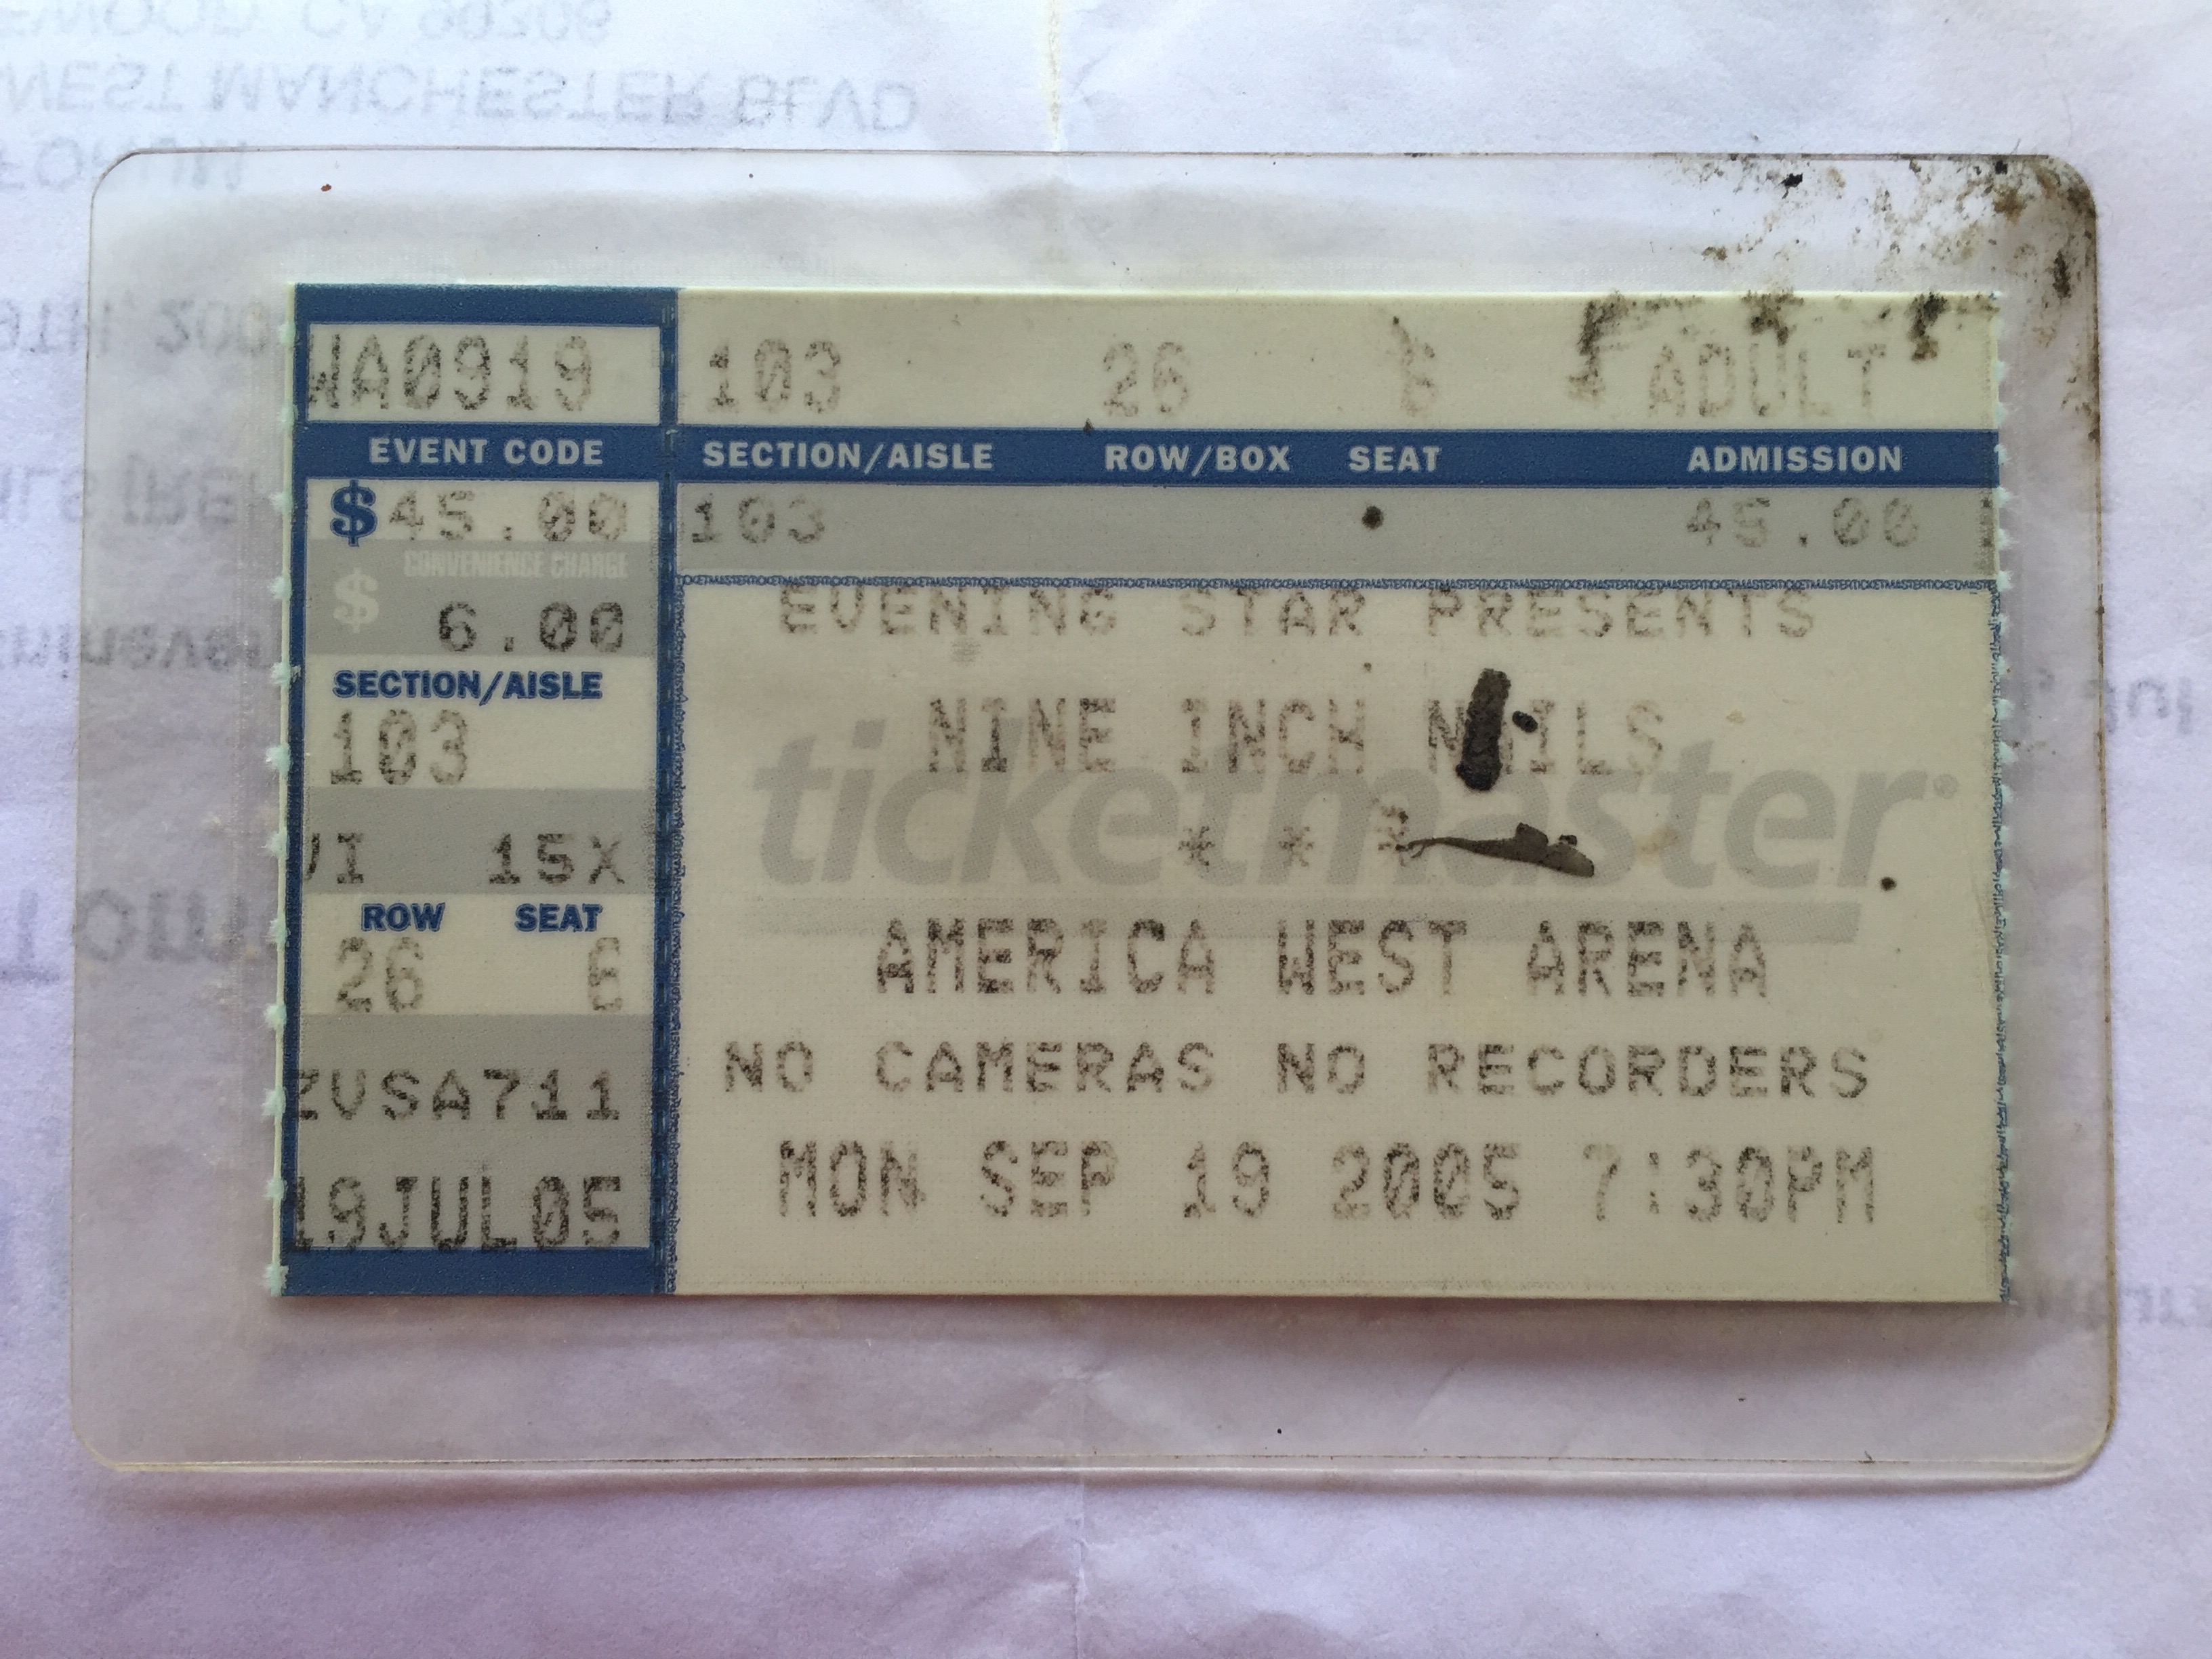 2005/09/19 Ticket